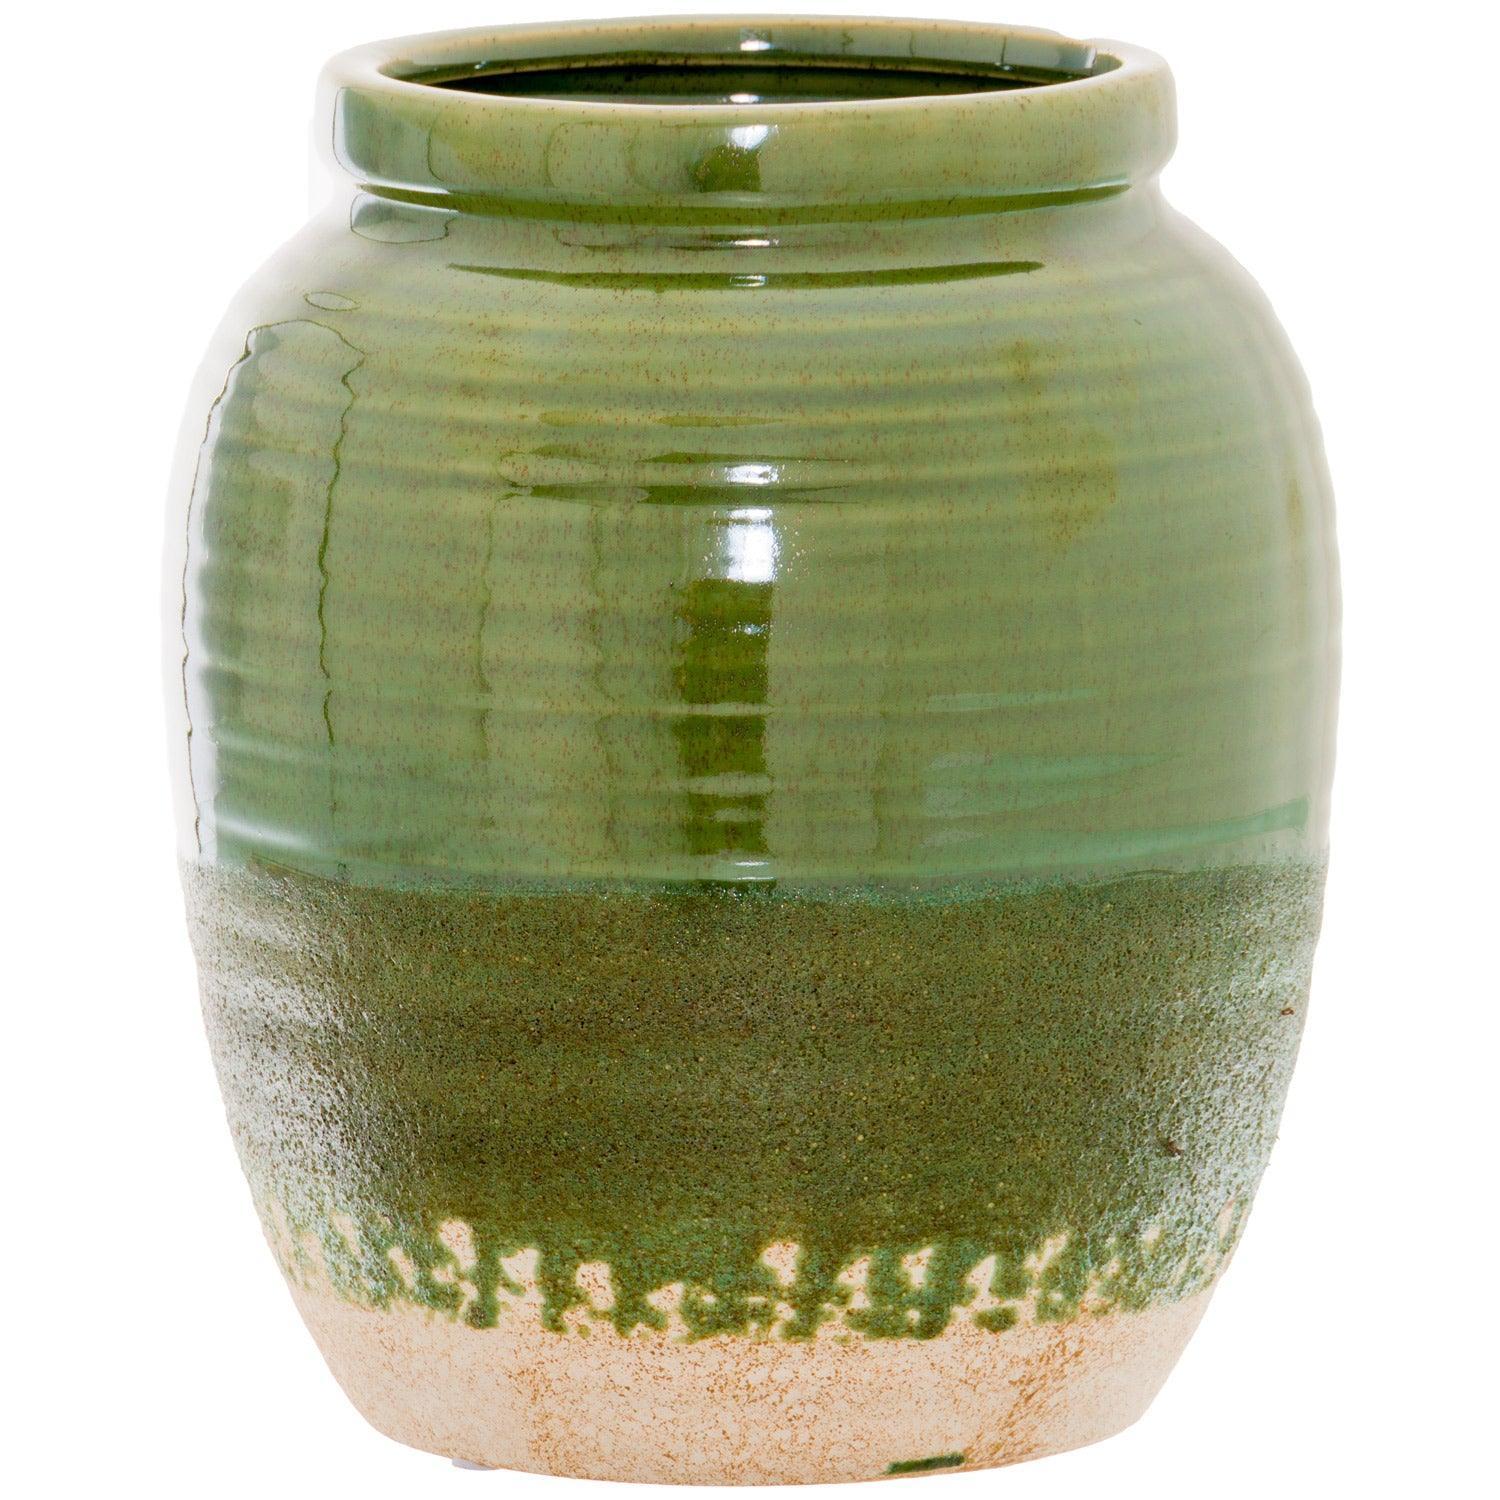 View Seville Collection Olive Bulbous Vase information